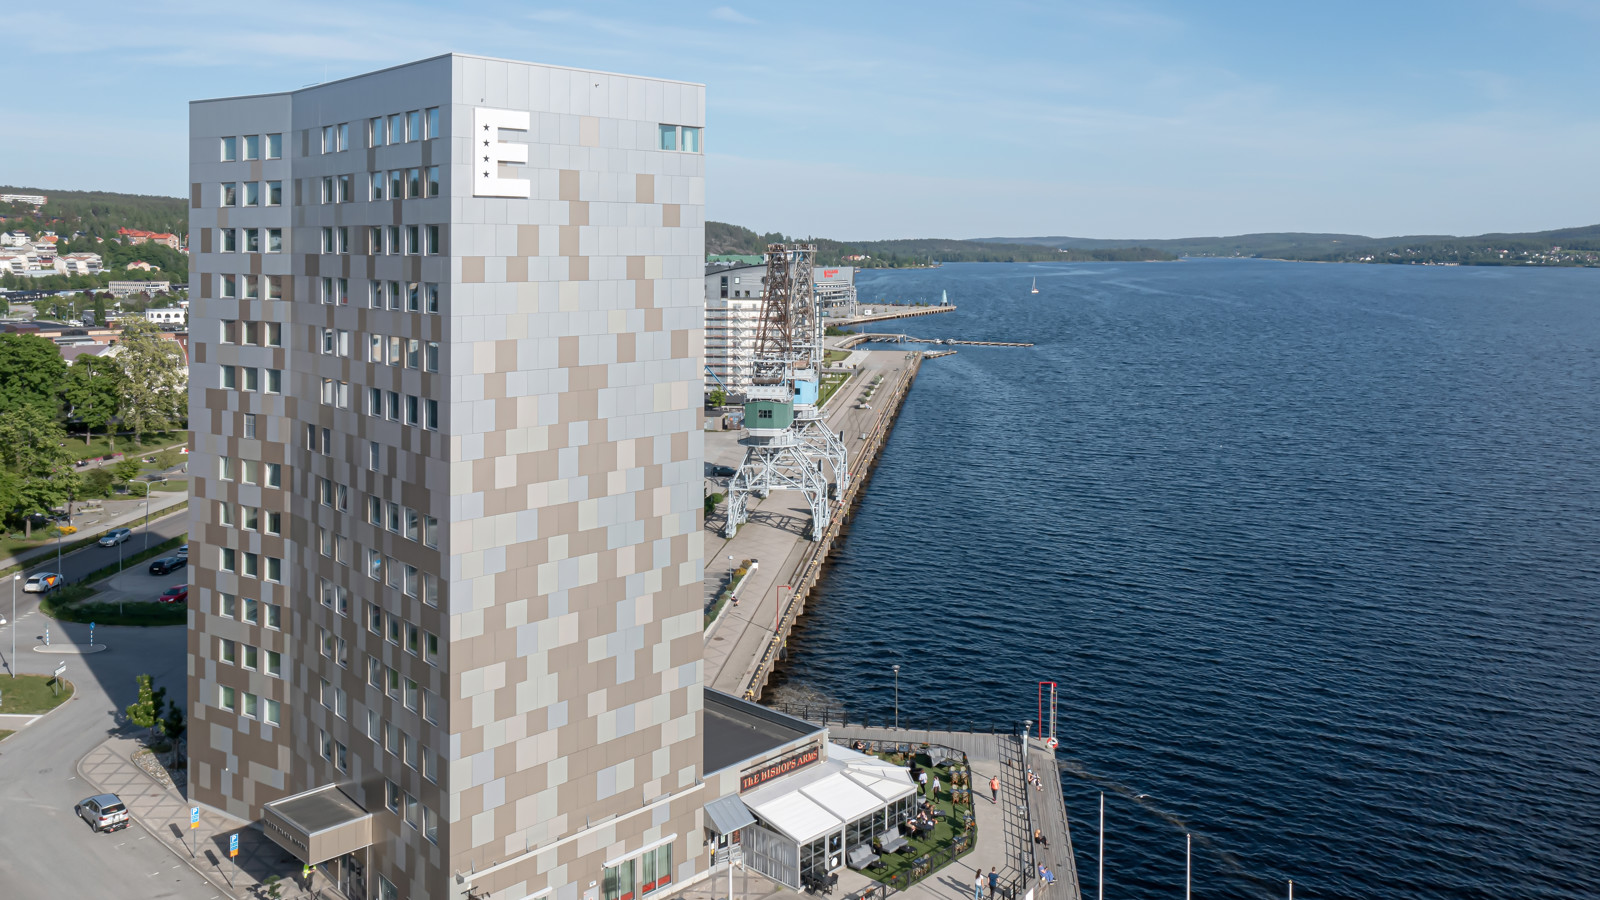 The facade of the Elite Plaza Hotel in Örnsköldsvik with the Bothnian Sea behind